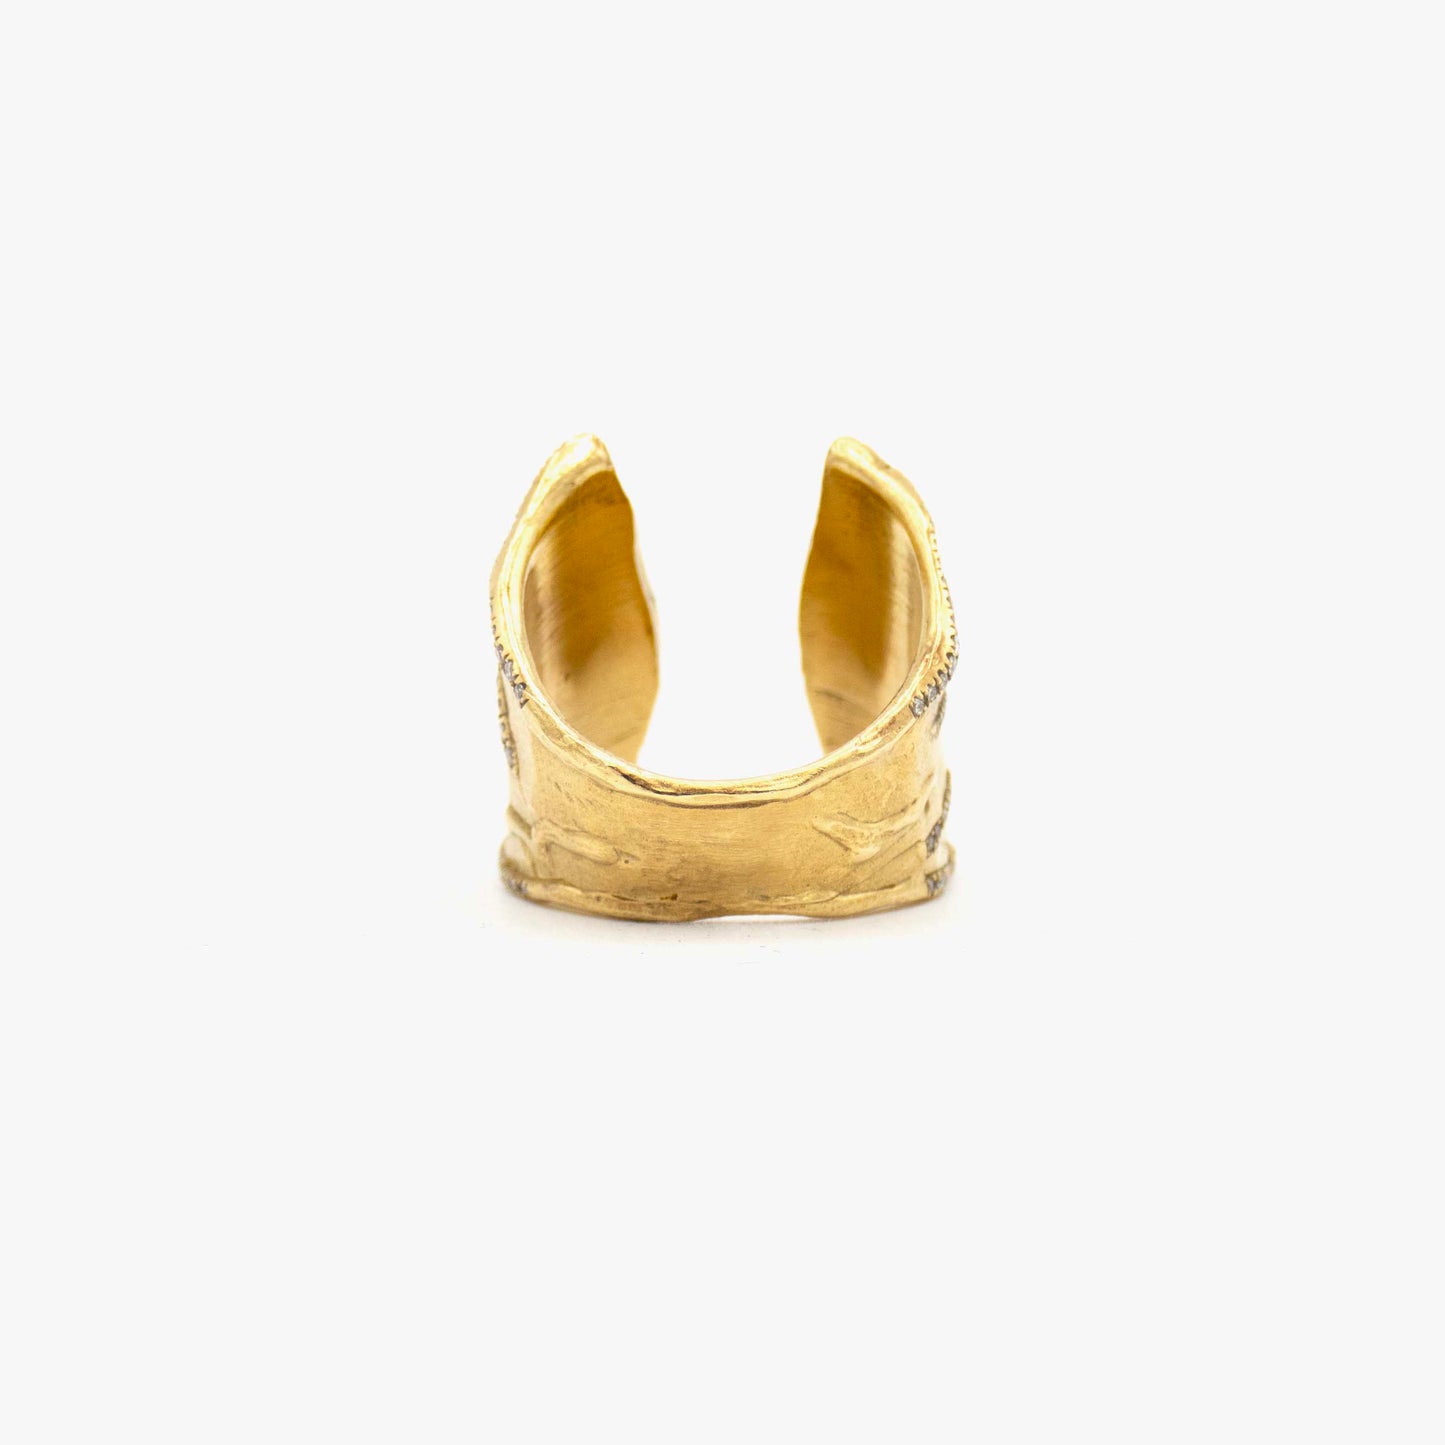 10K Gold Open Cuff Ring